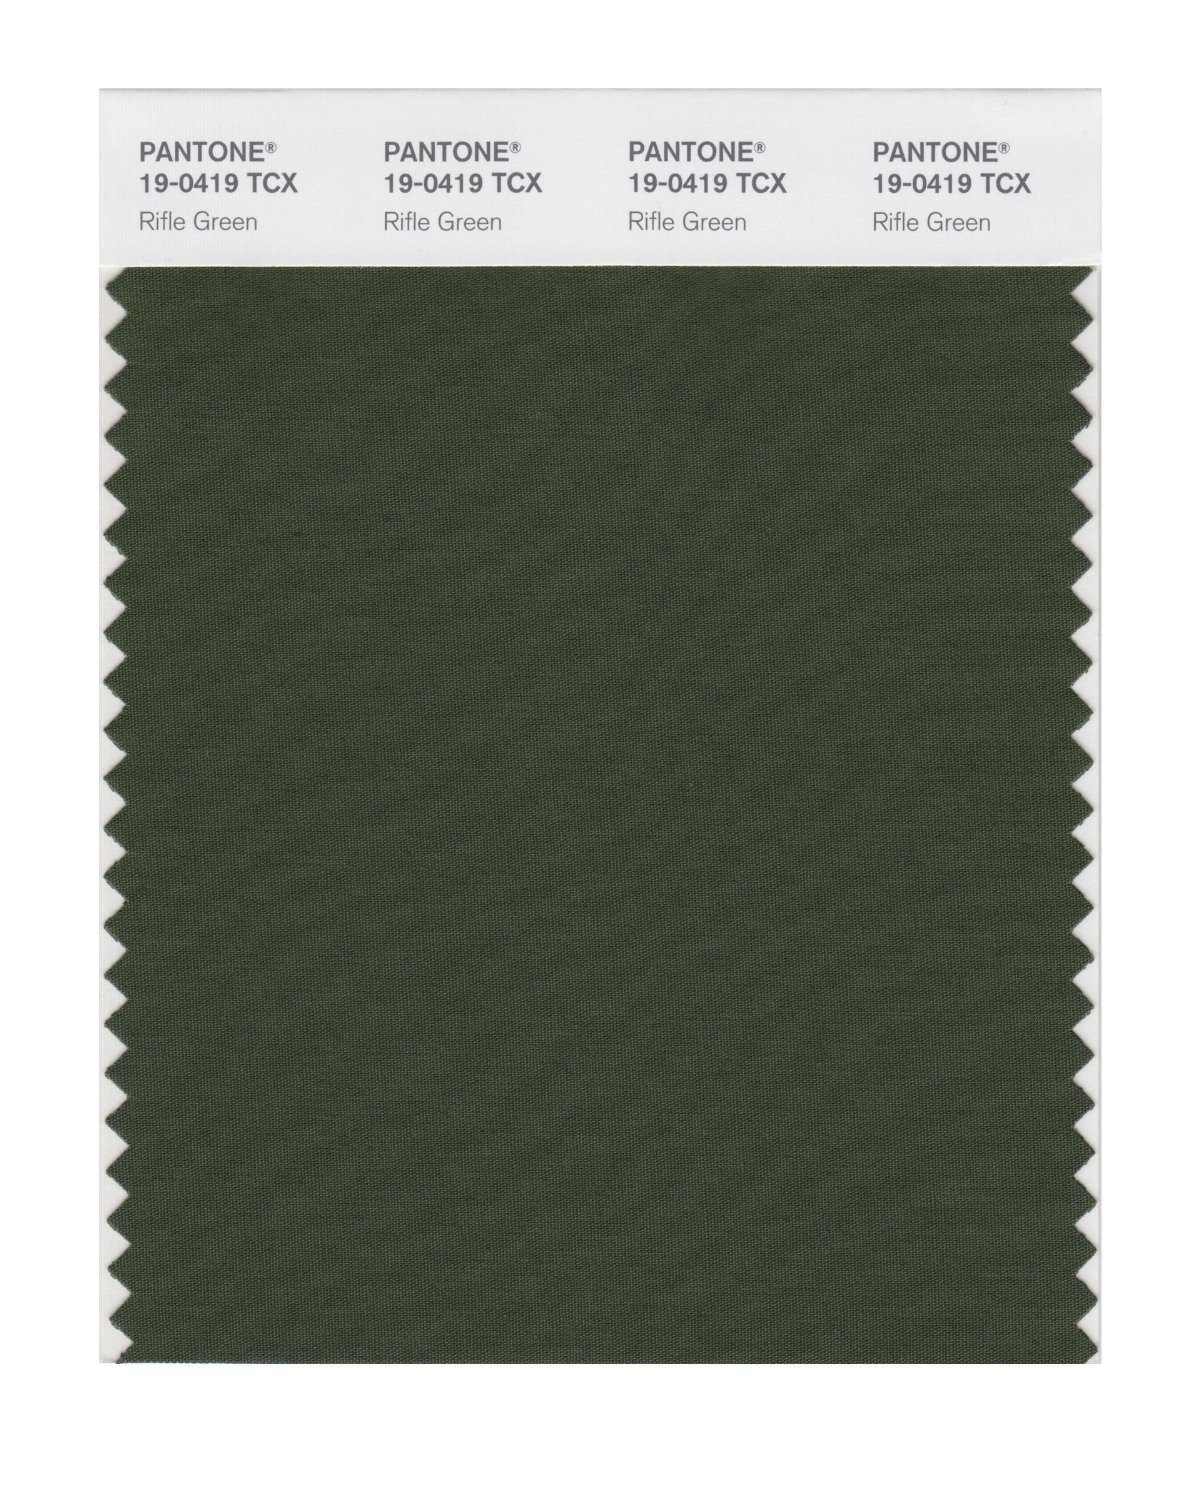 BUY Pantone Cotton Swatch 19-0419 Rifle Green